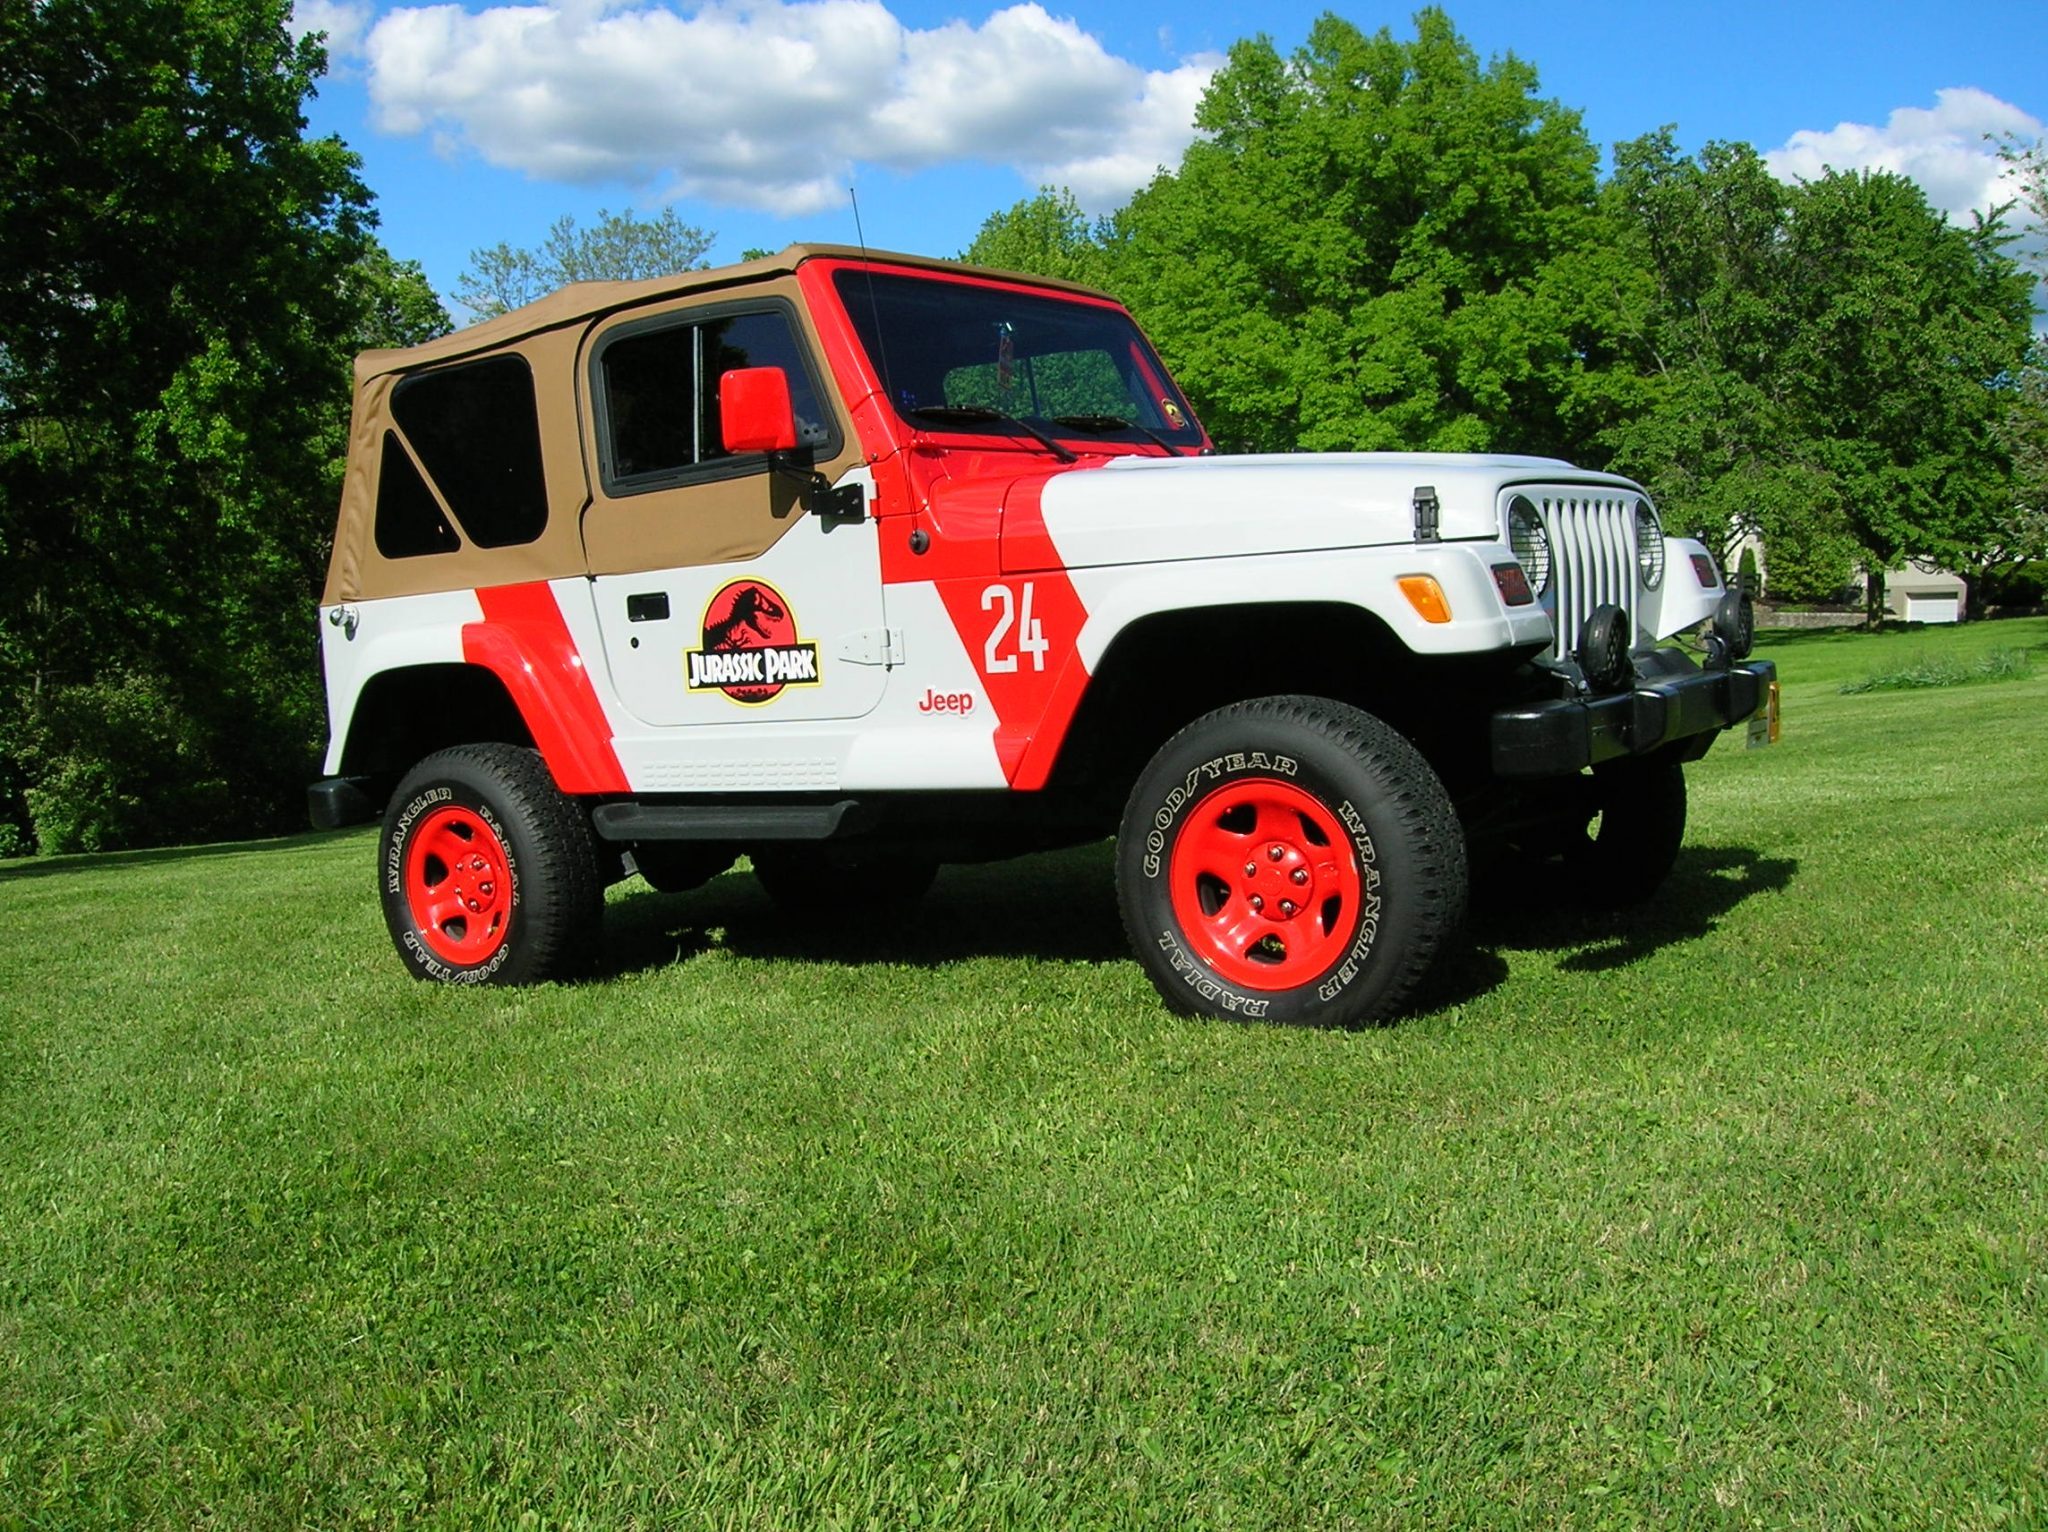 Jeep Wrangler Jurassic Park Tribute Is Here to Take You to Isla Nublar -  autoevolution